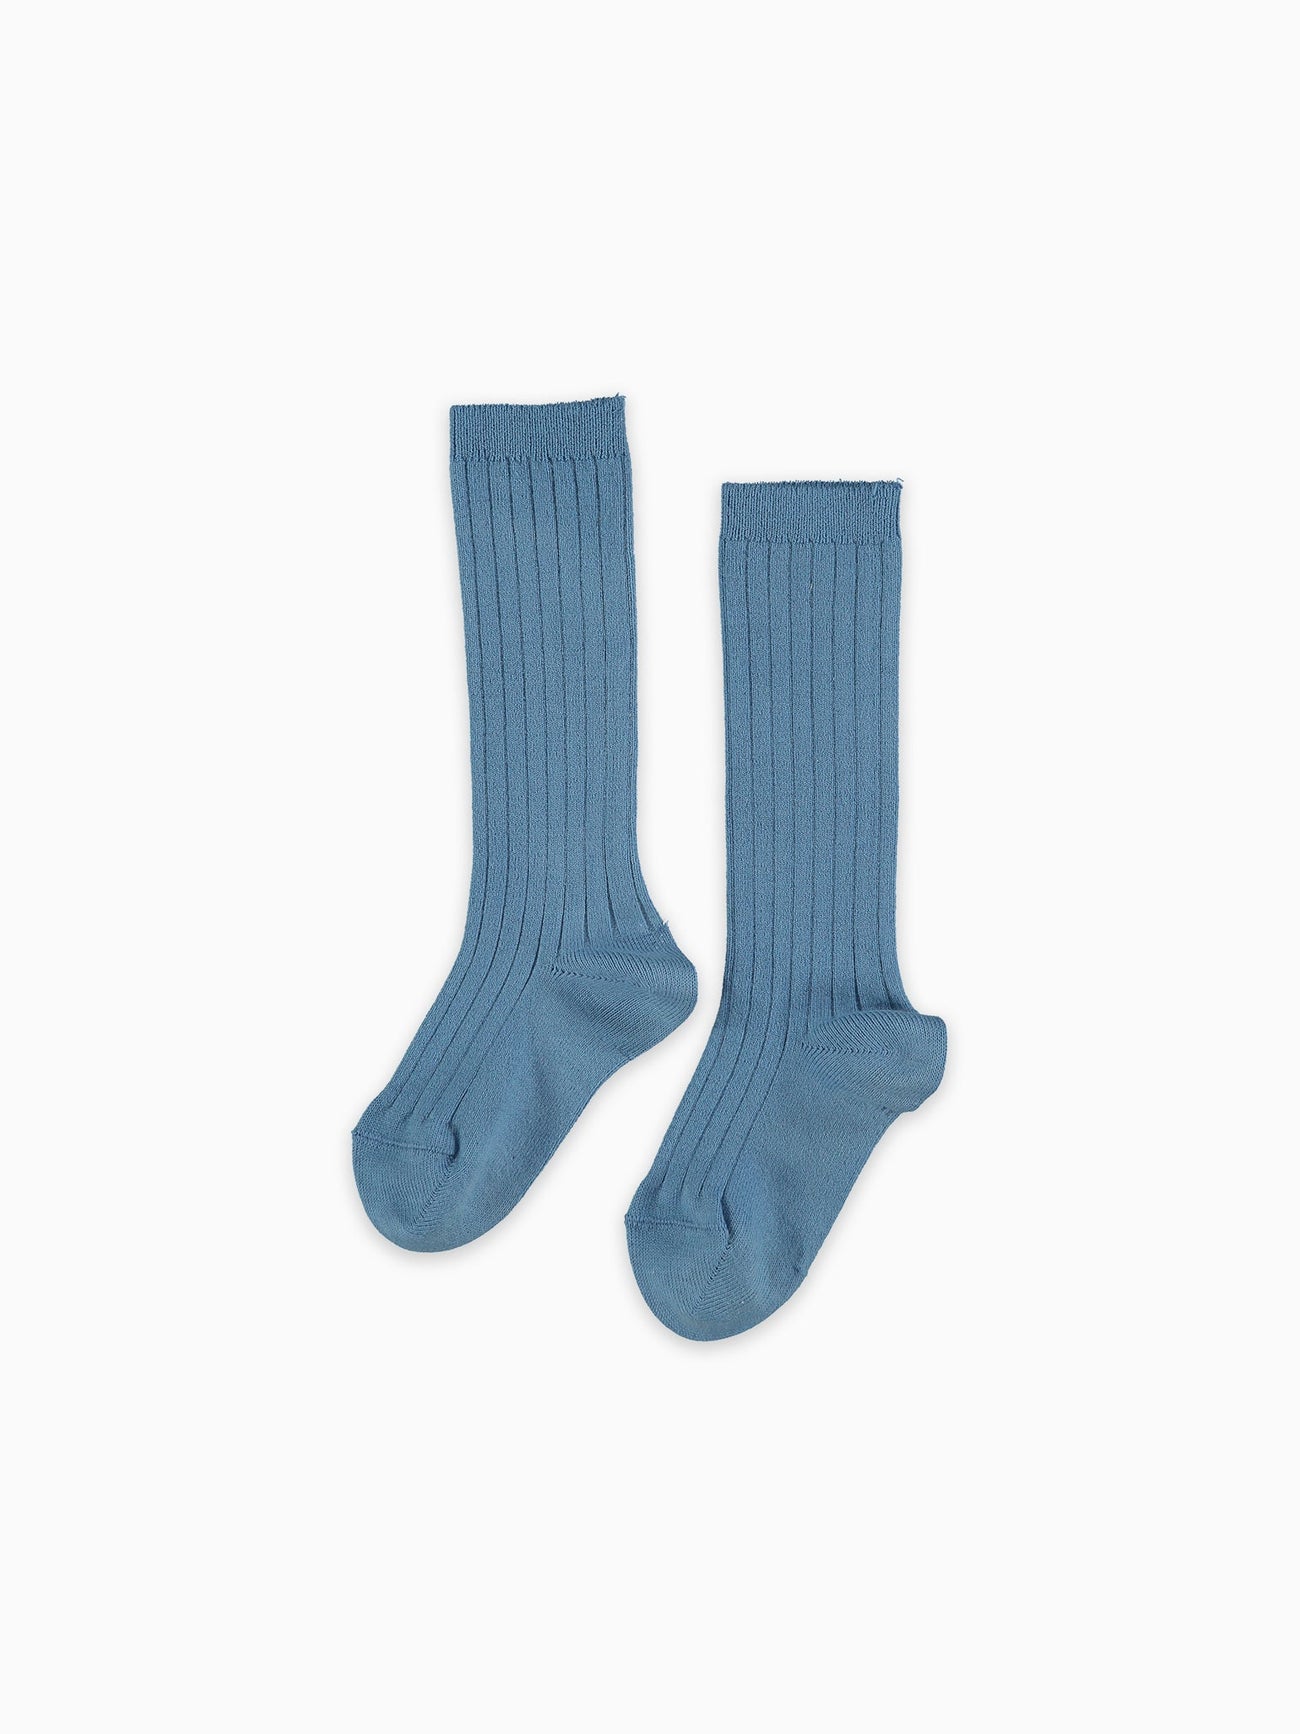 Dusty Blue Ribbed Knee High Kids Socks